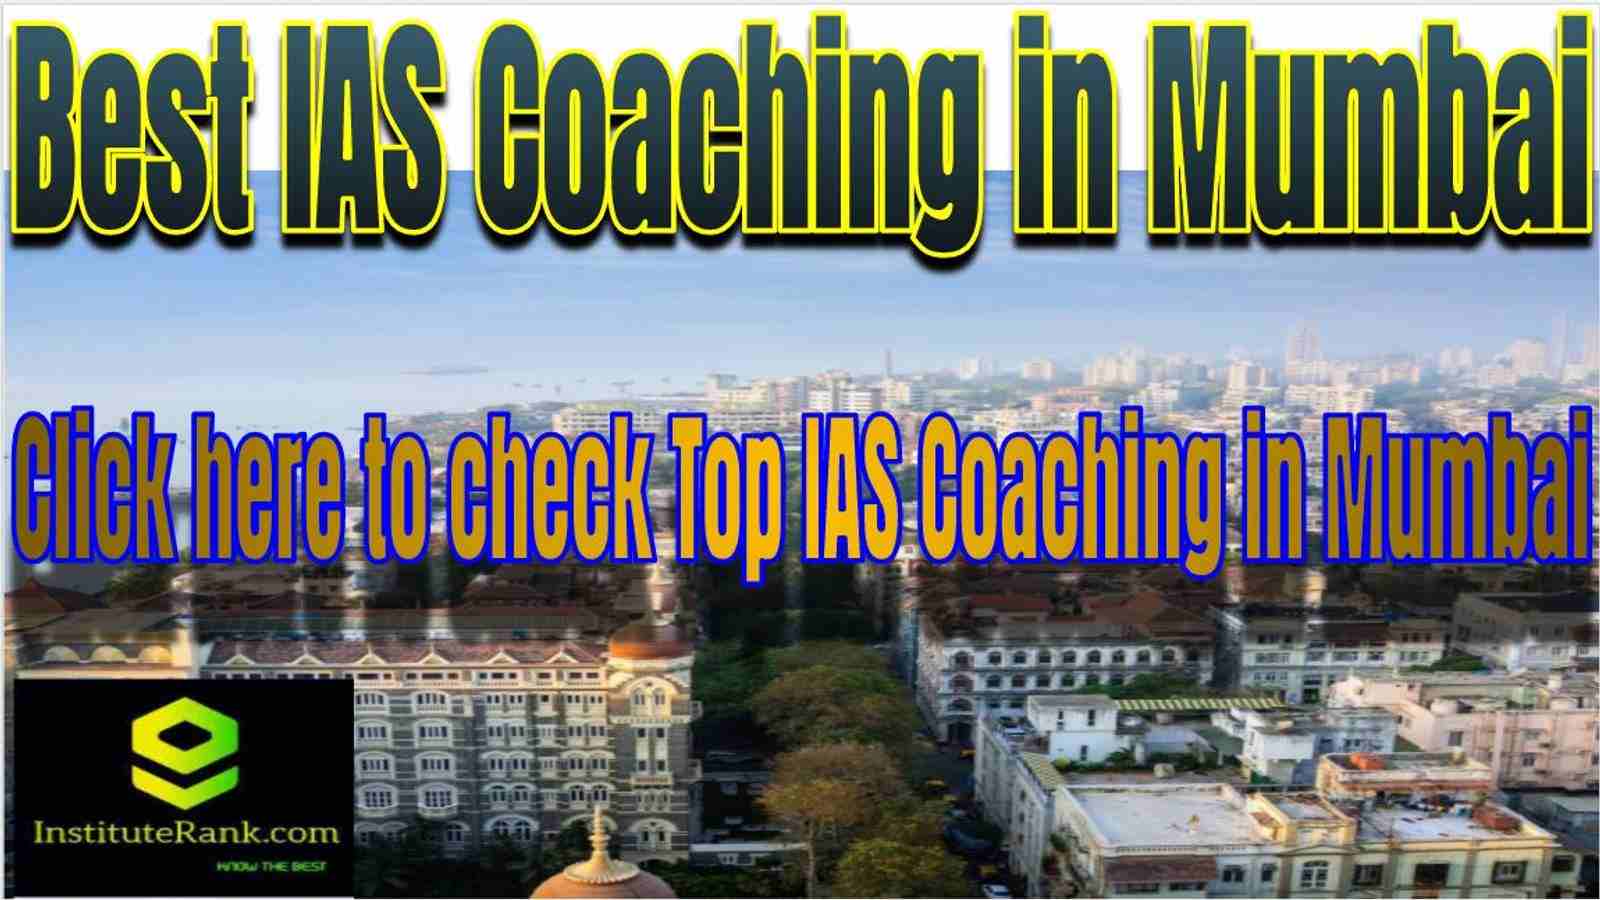 List of Best IAS Coachings in Mumbai